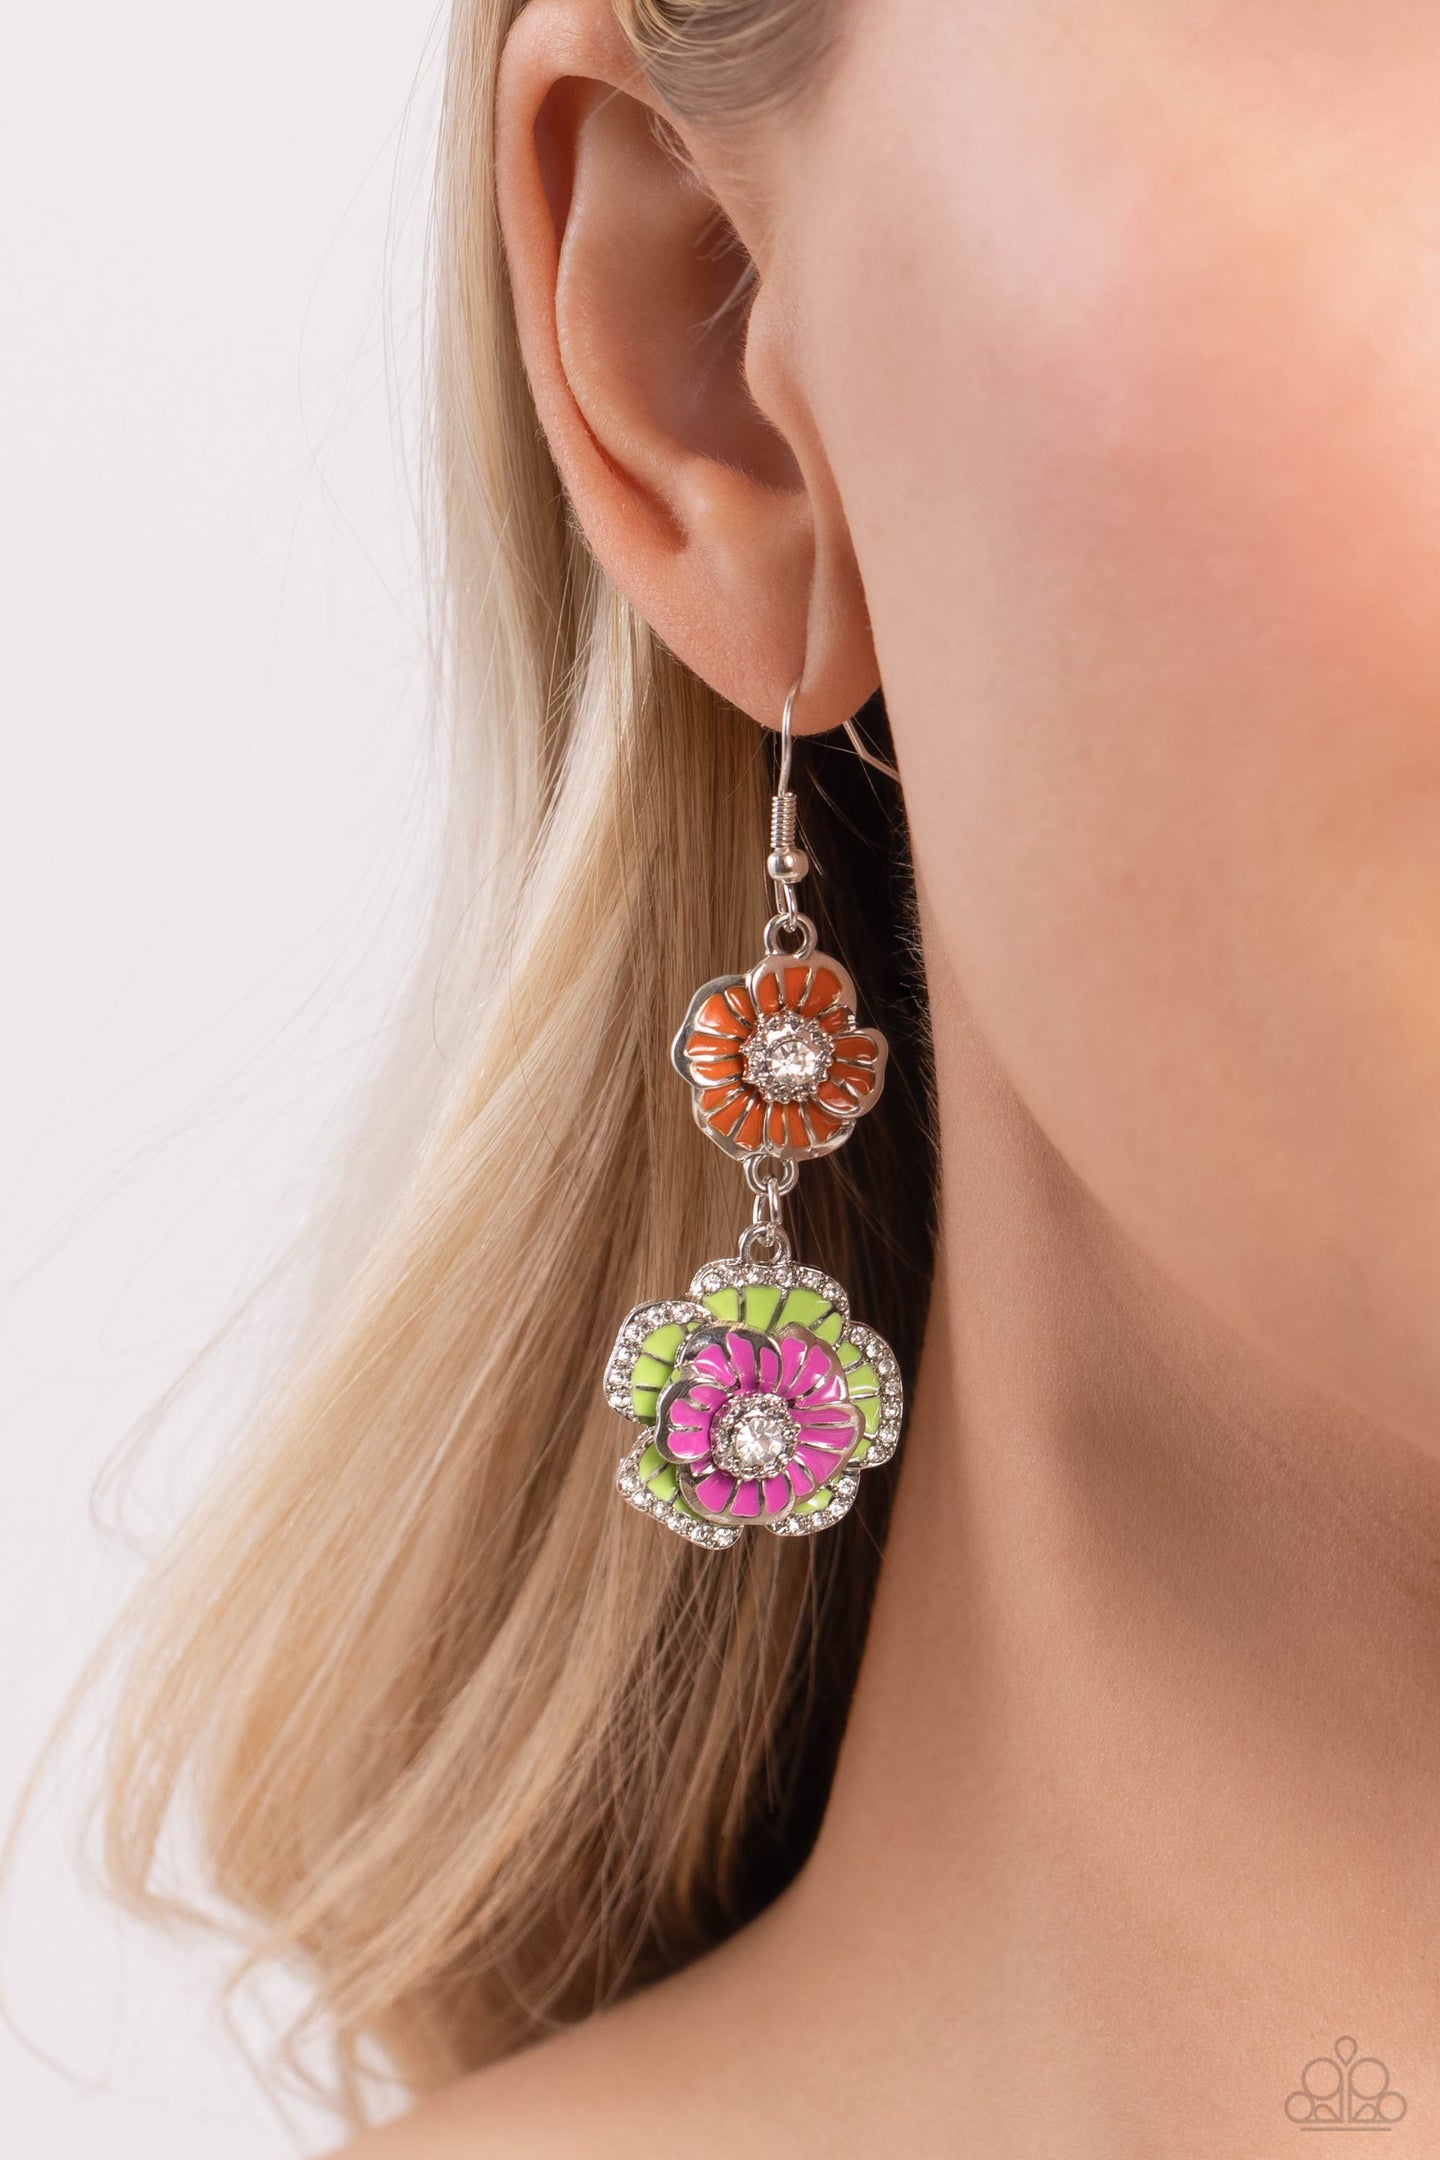 Intricate Impression - Multi earrings